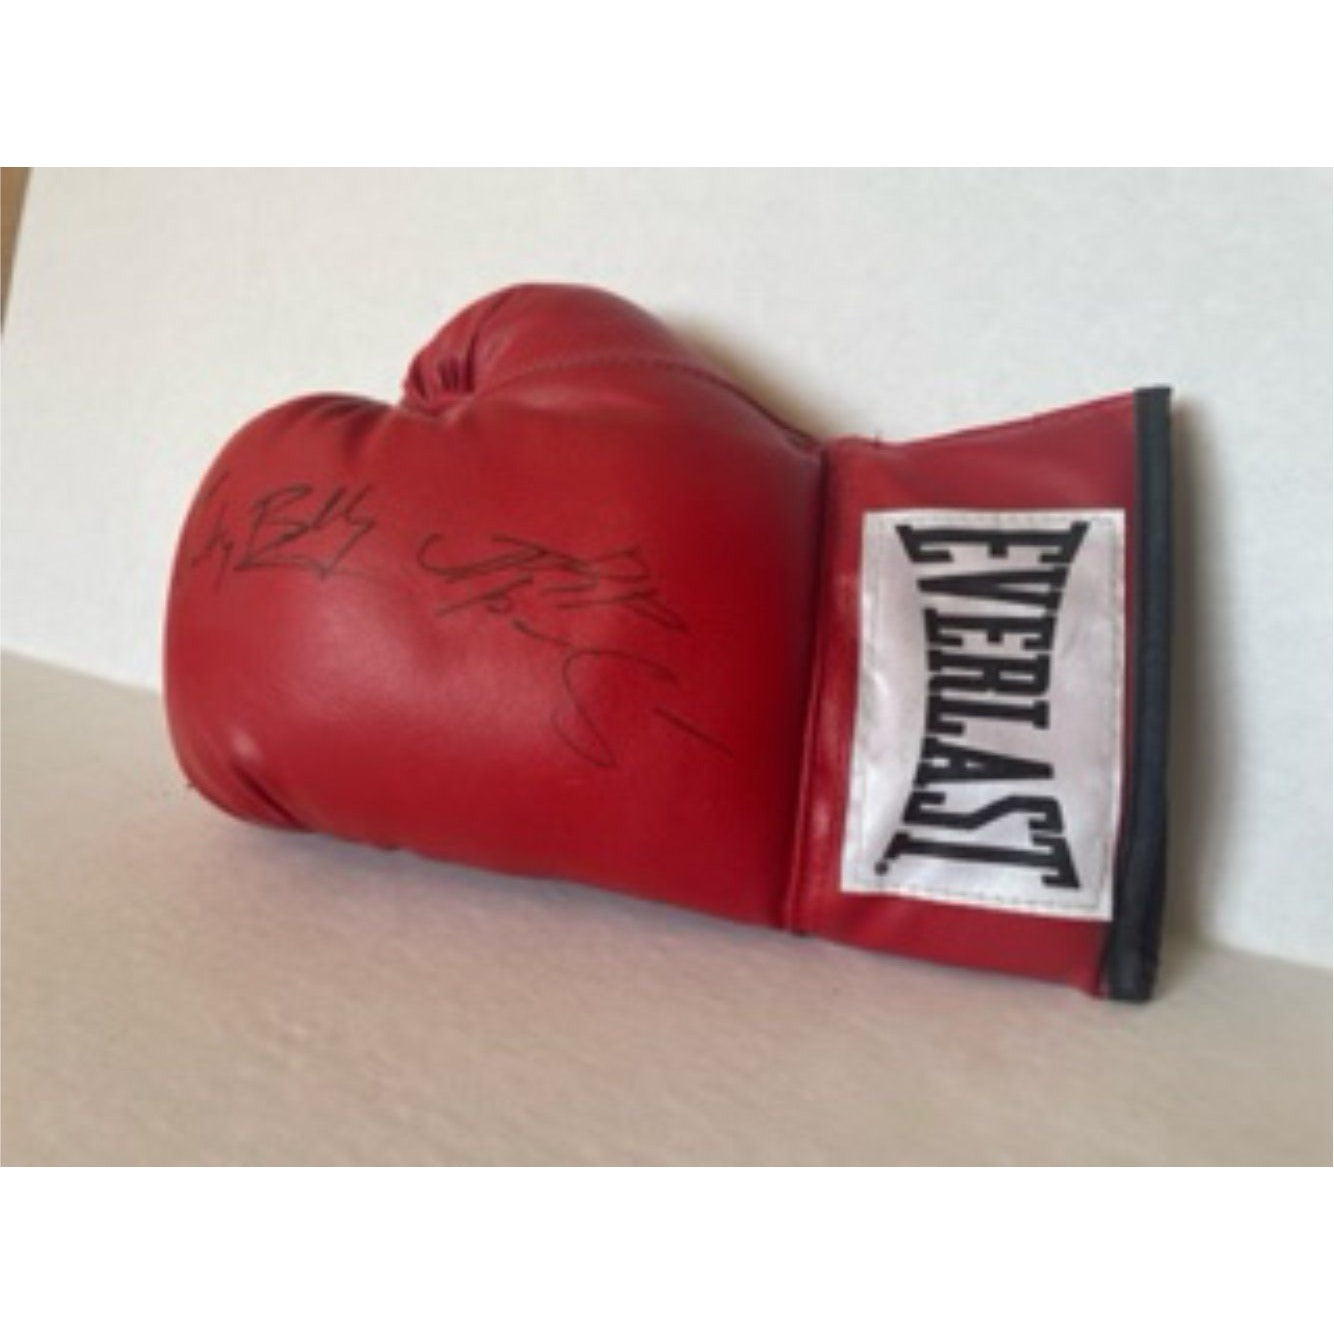 Timothy Bradley Ruslan Provodnikov Everlast leather boxing glove signe